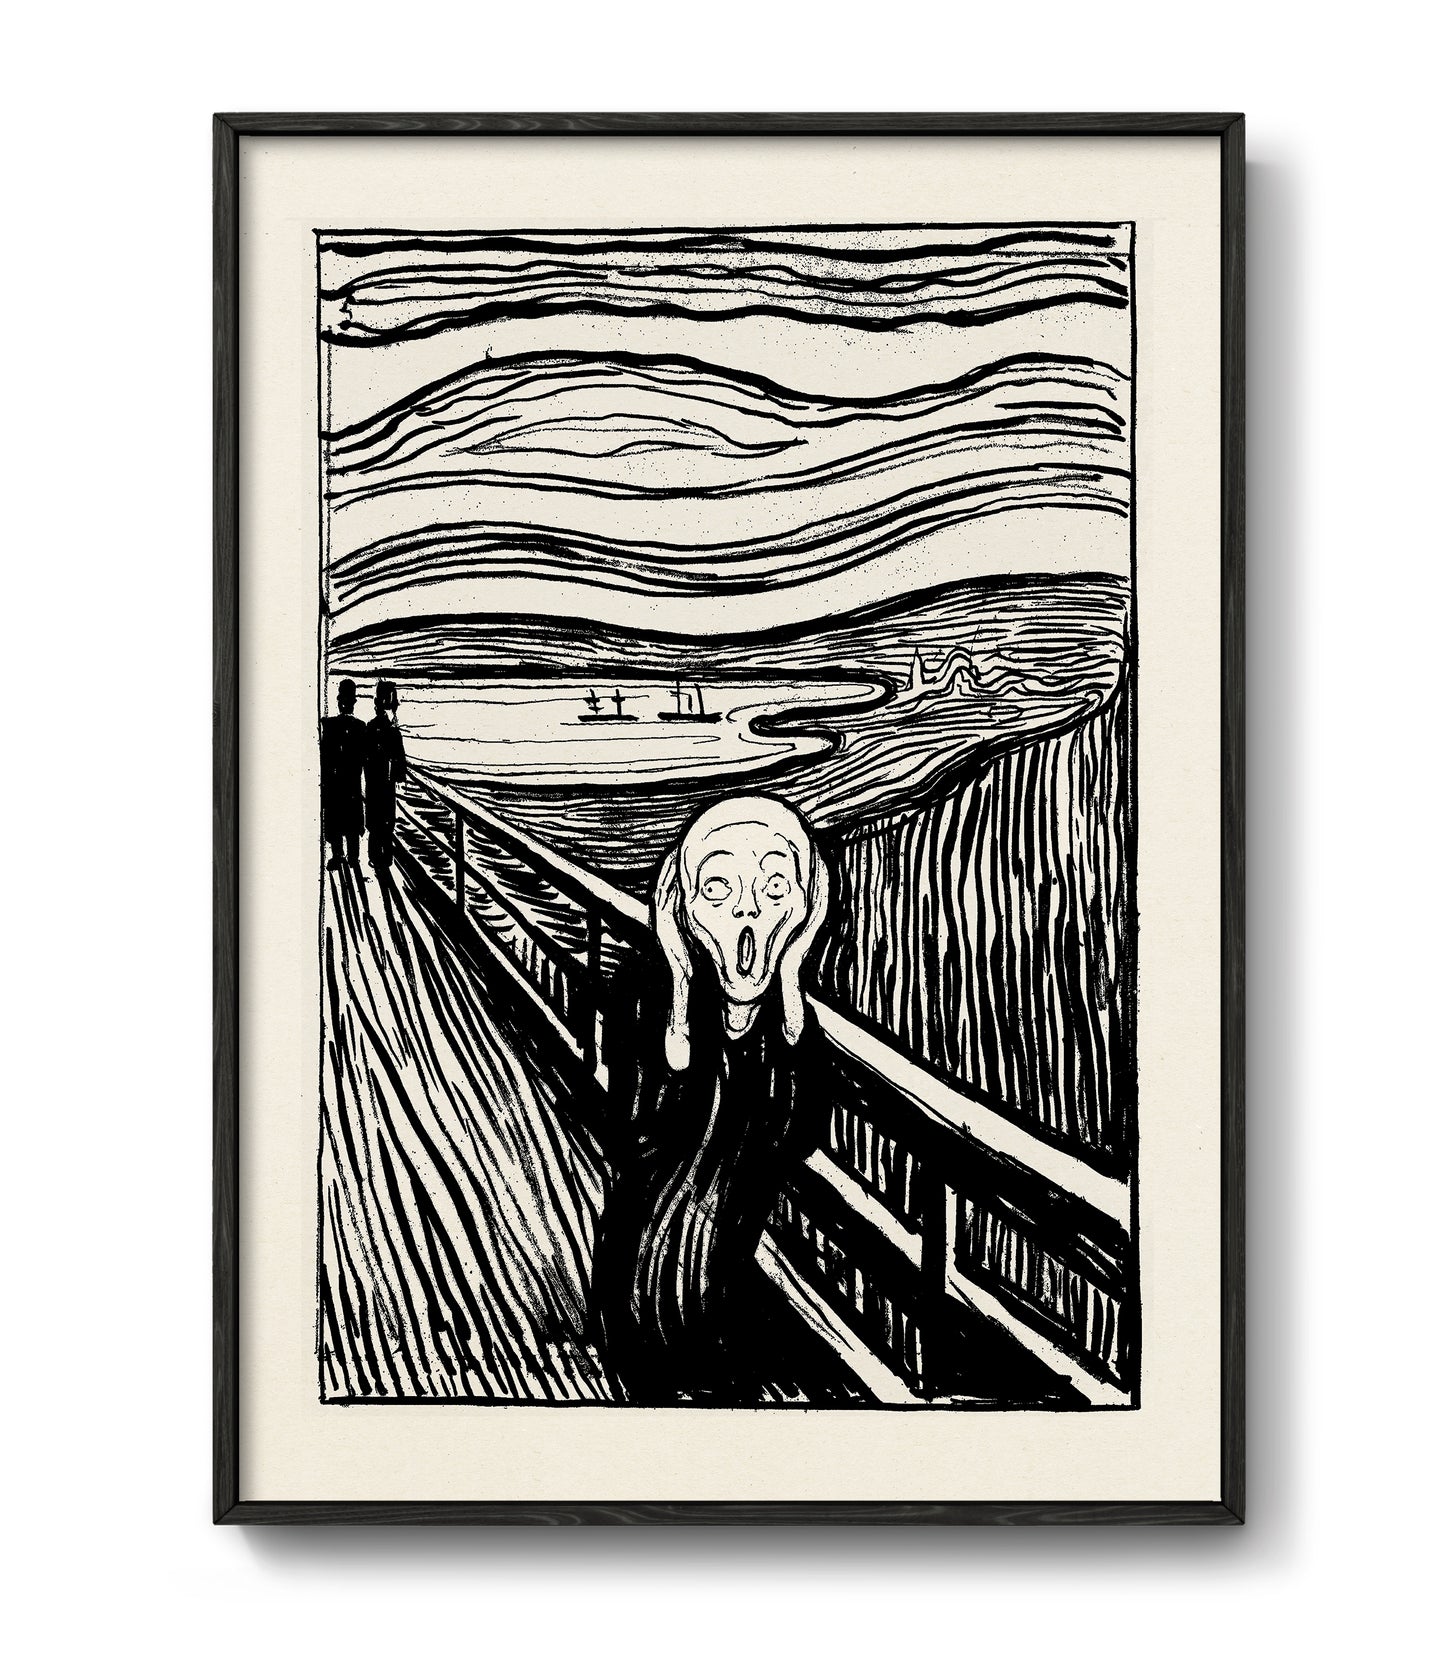 The scream by  Edvard Munch, 1895